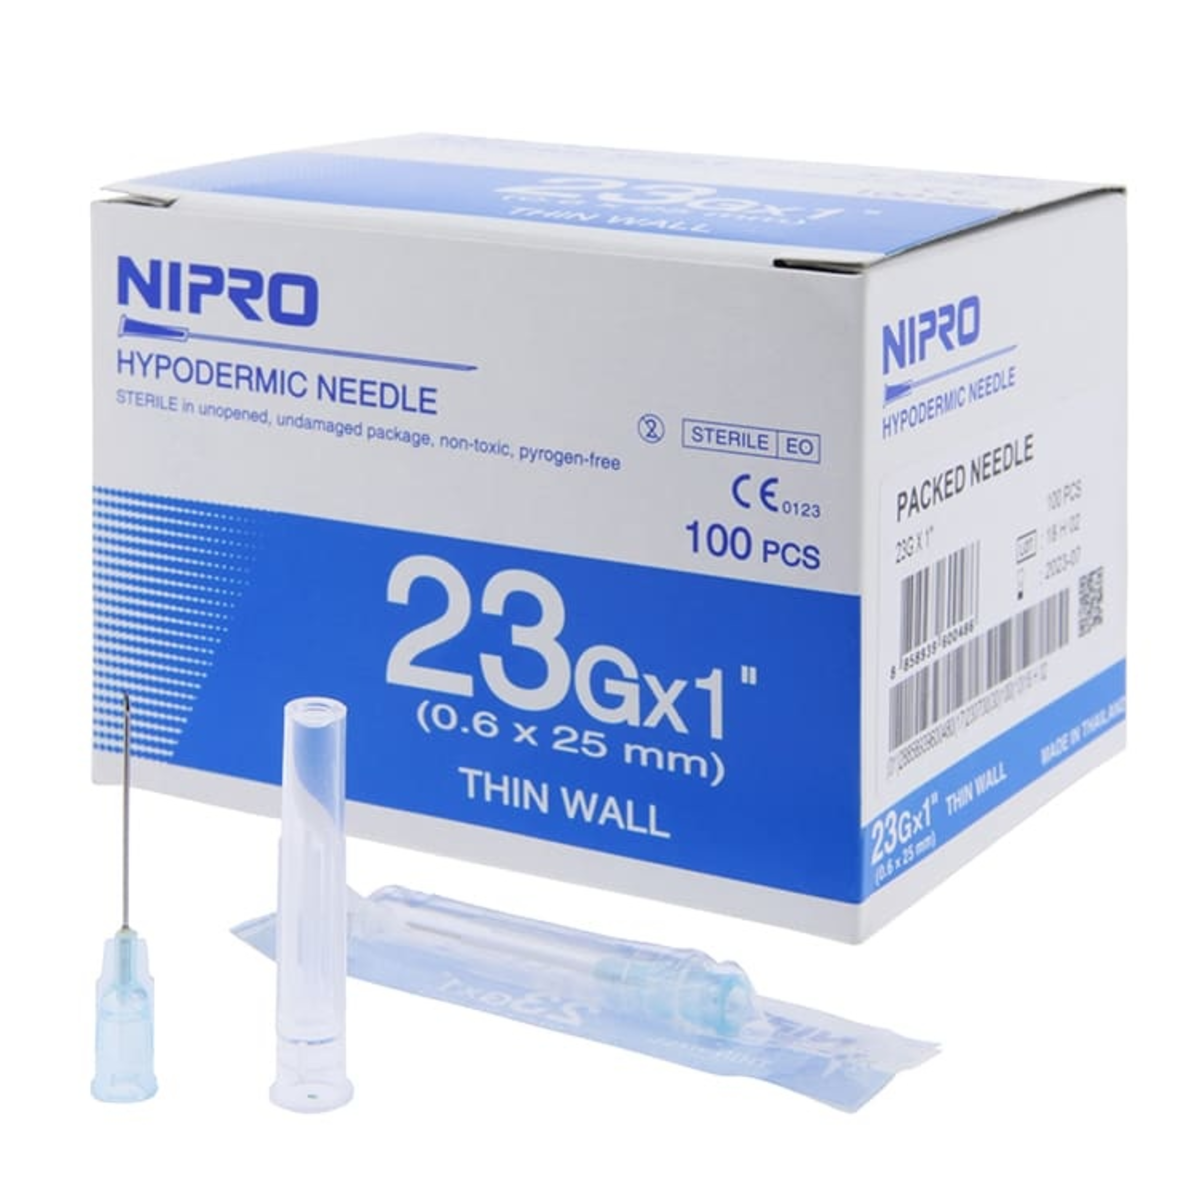 NIPRO เข็มฉีดยา ขนาด 23G x 1  นิ้ว (กล่อง)